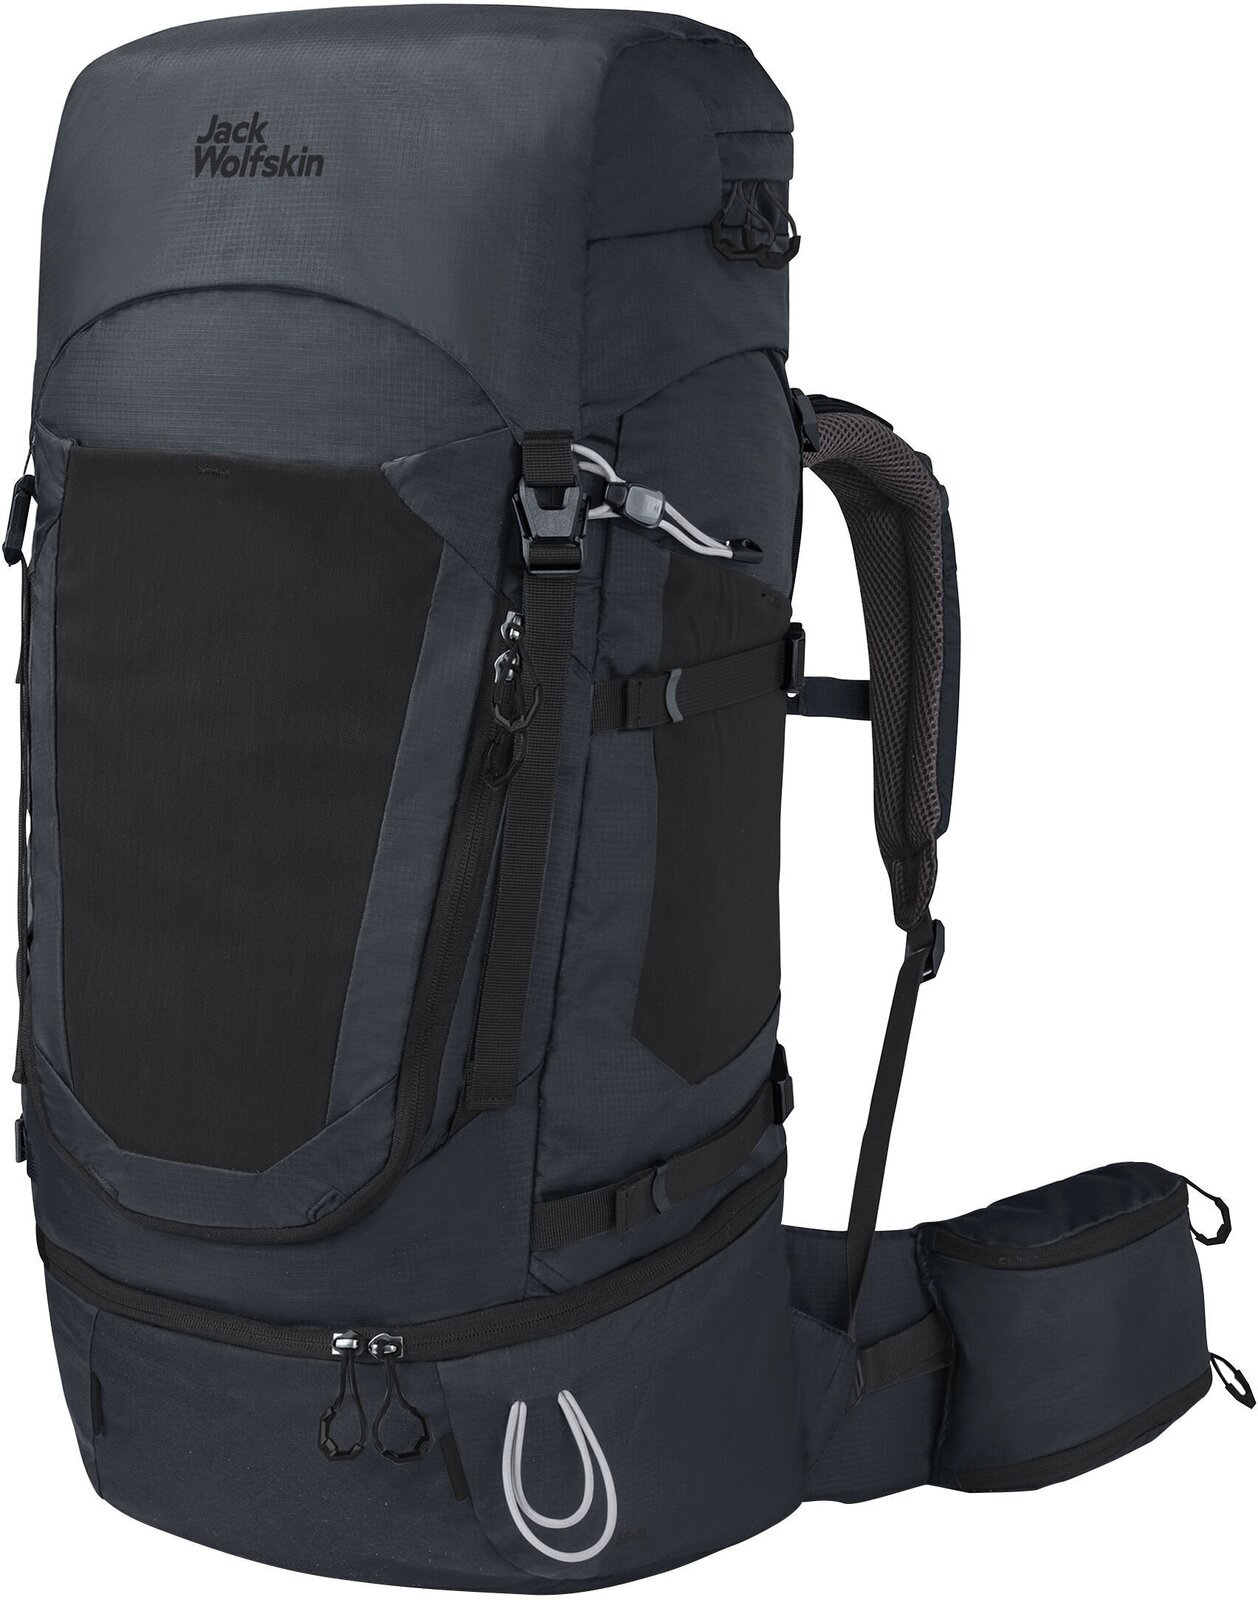 Outdoor Backpack Jack Wolfskin Highland Trail 50+5 Women Phantom XS-M Outdoor Backpack